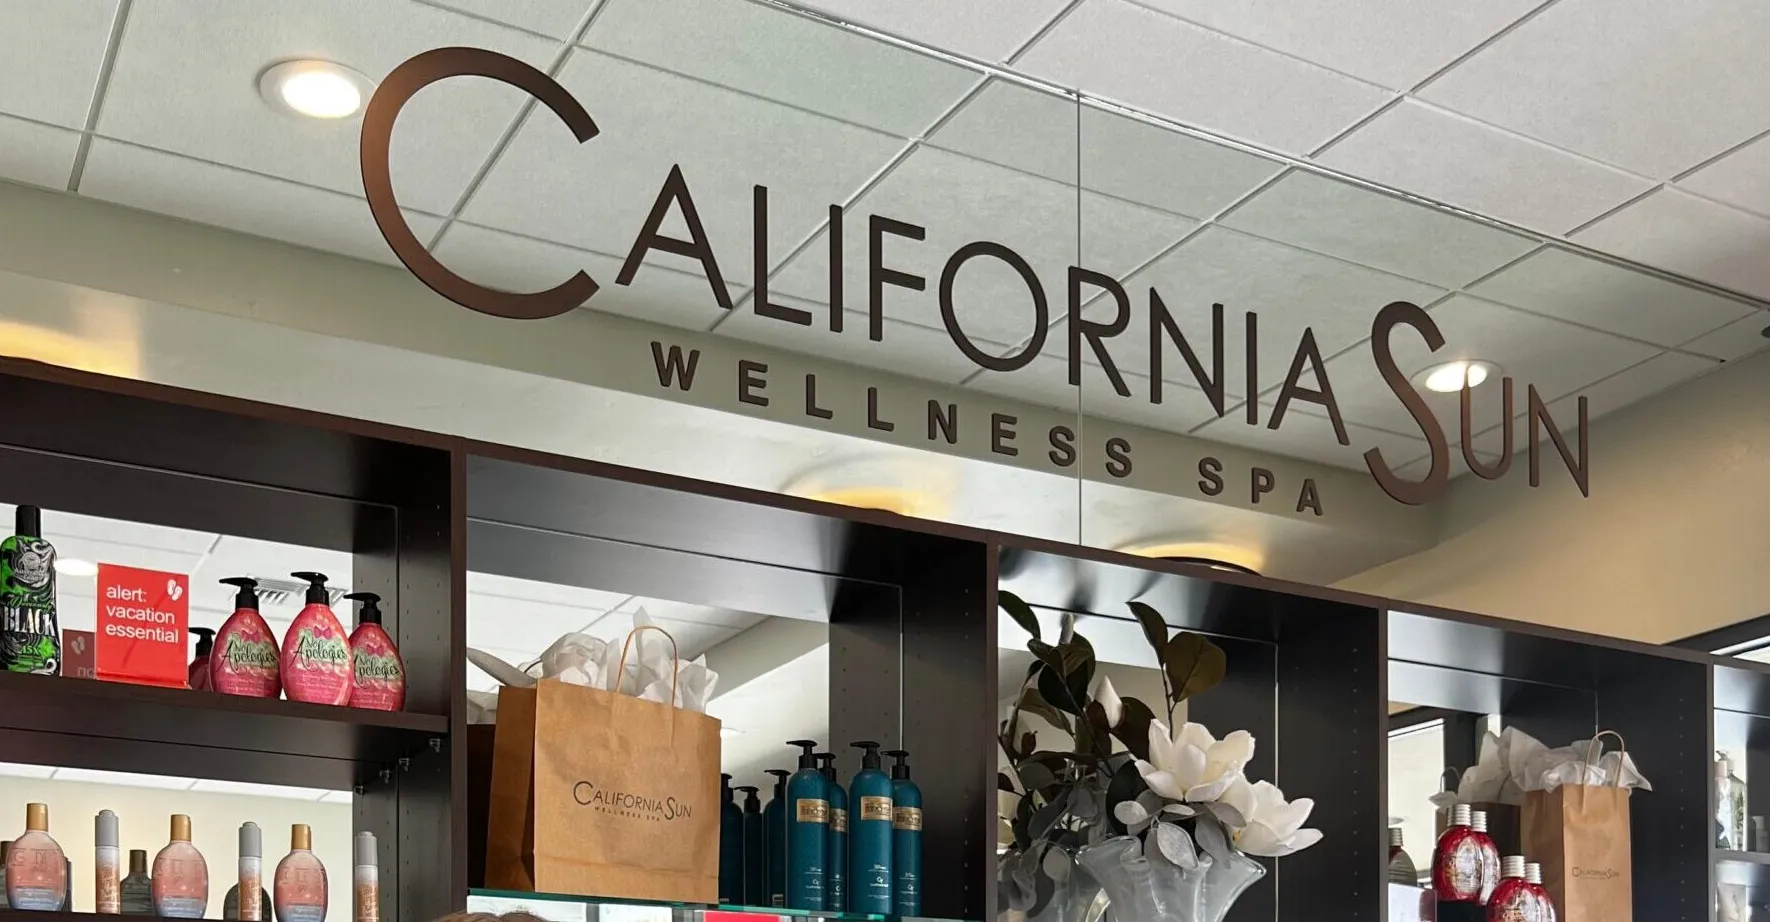 California Sun Wellness Spa Franchise Opportunity